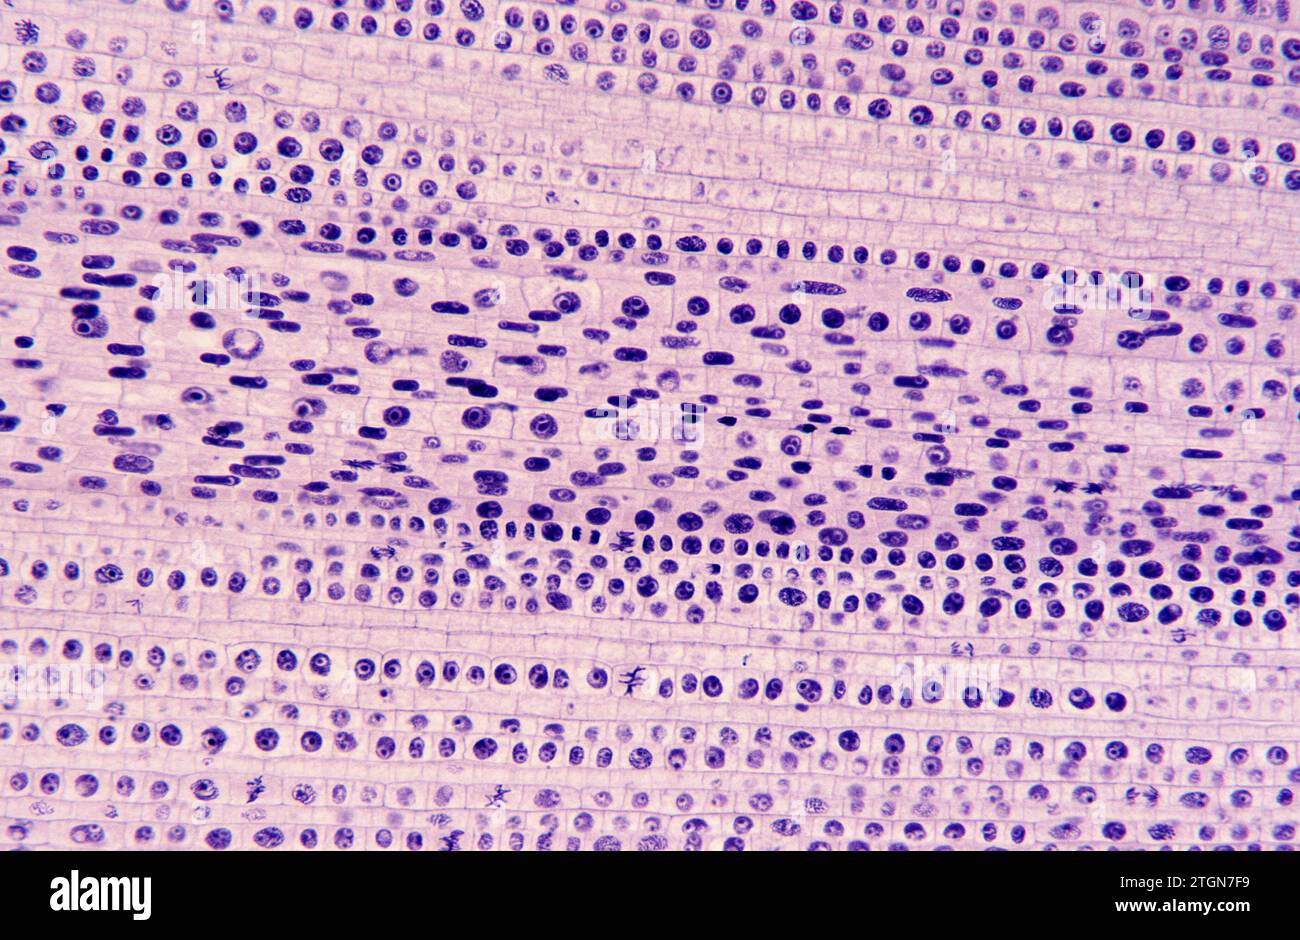 Apikaler Wurzelmeristem mit Zellteilung (Mitose). Photomikrographische Zwiebelwurzel. Stockfoto